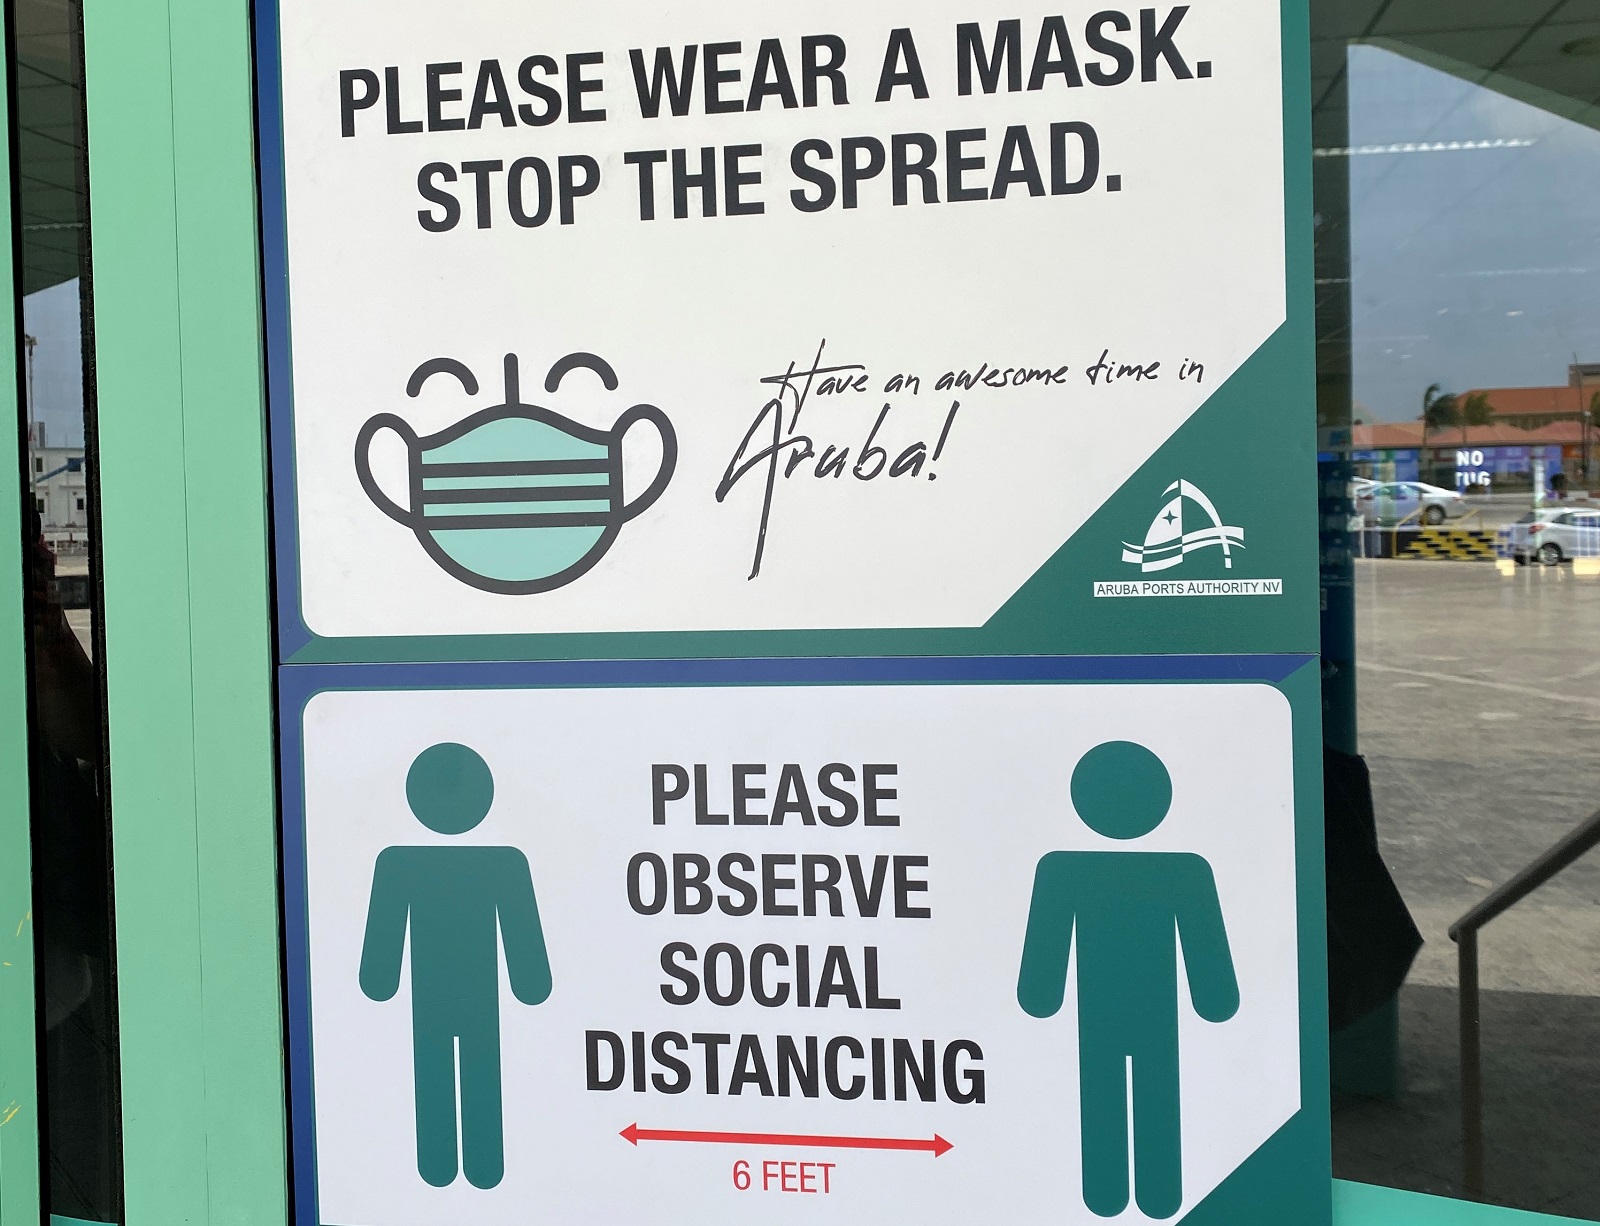 Aruba mask and social distancing reminders